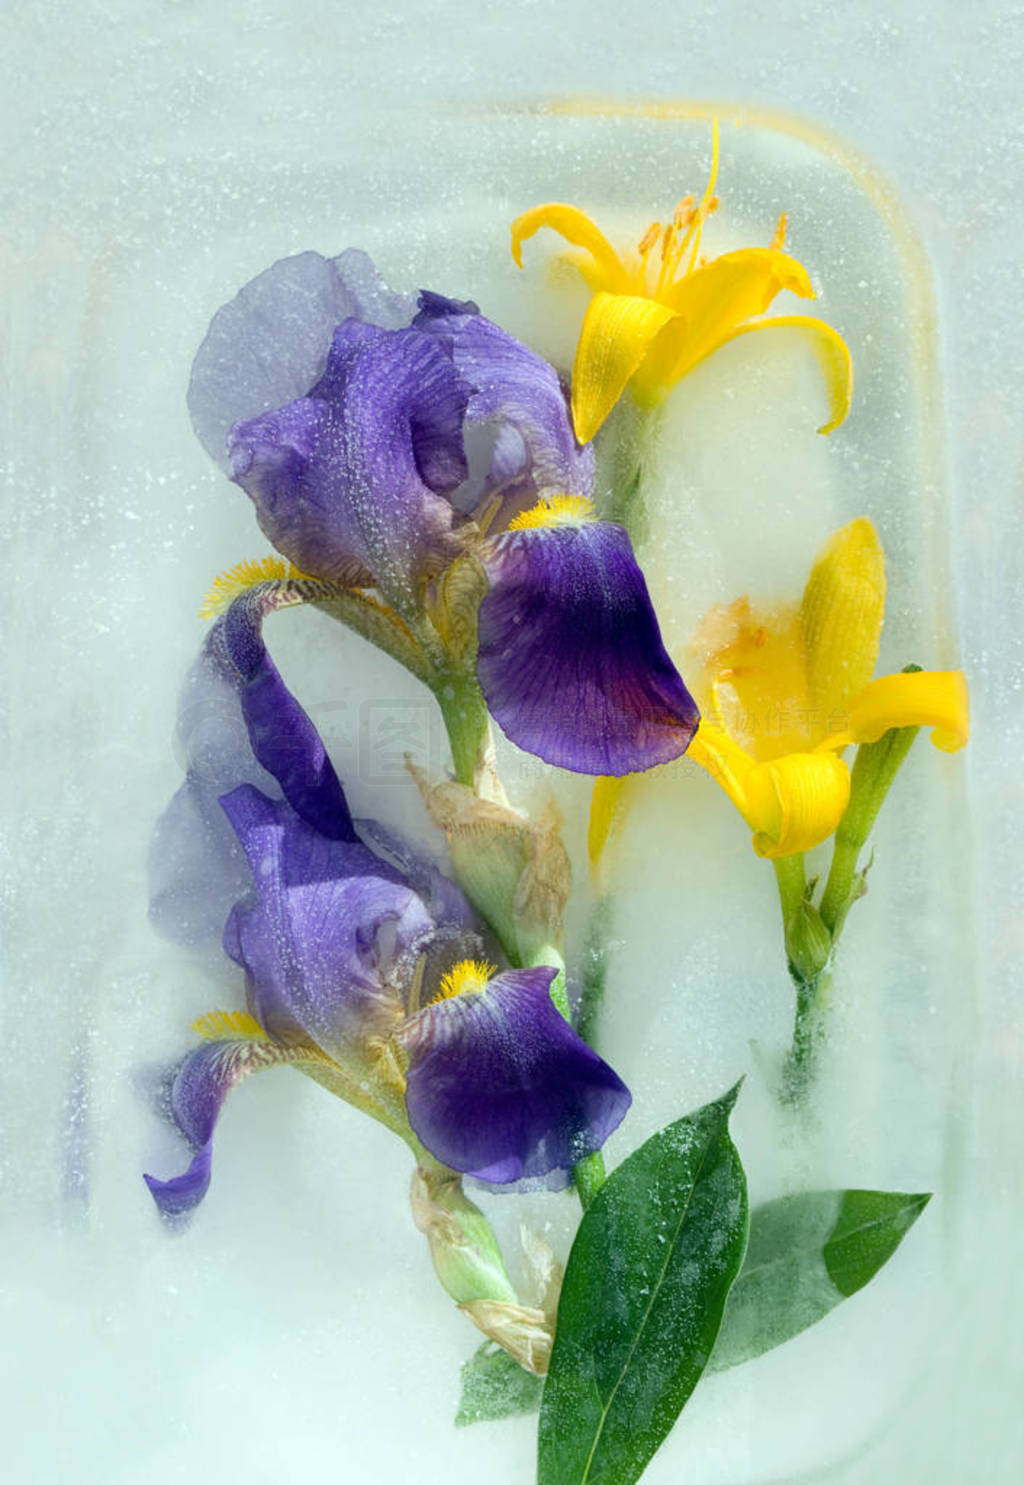 Frozen flower of iris